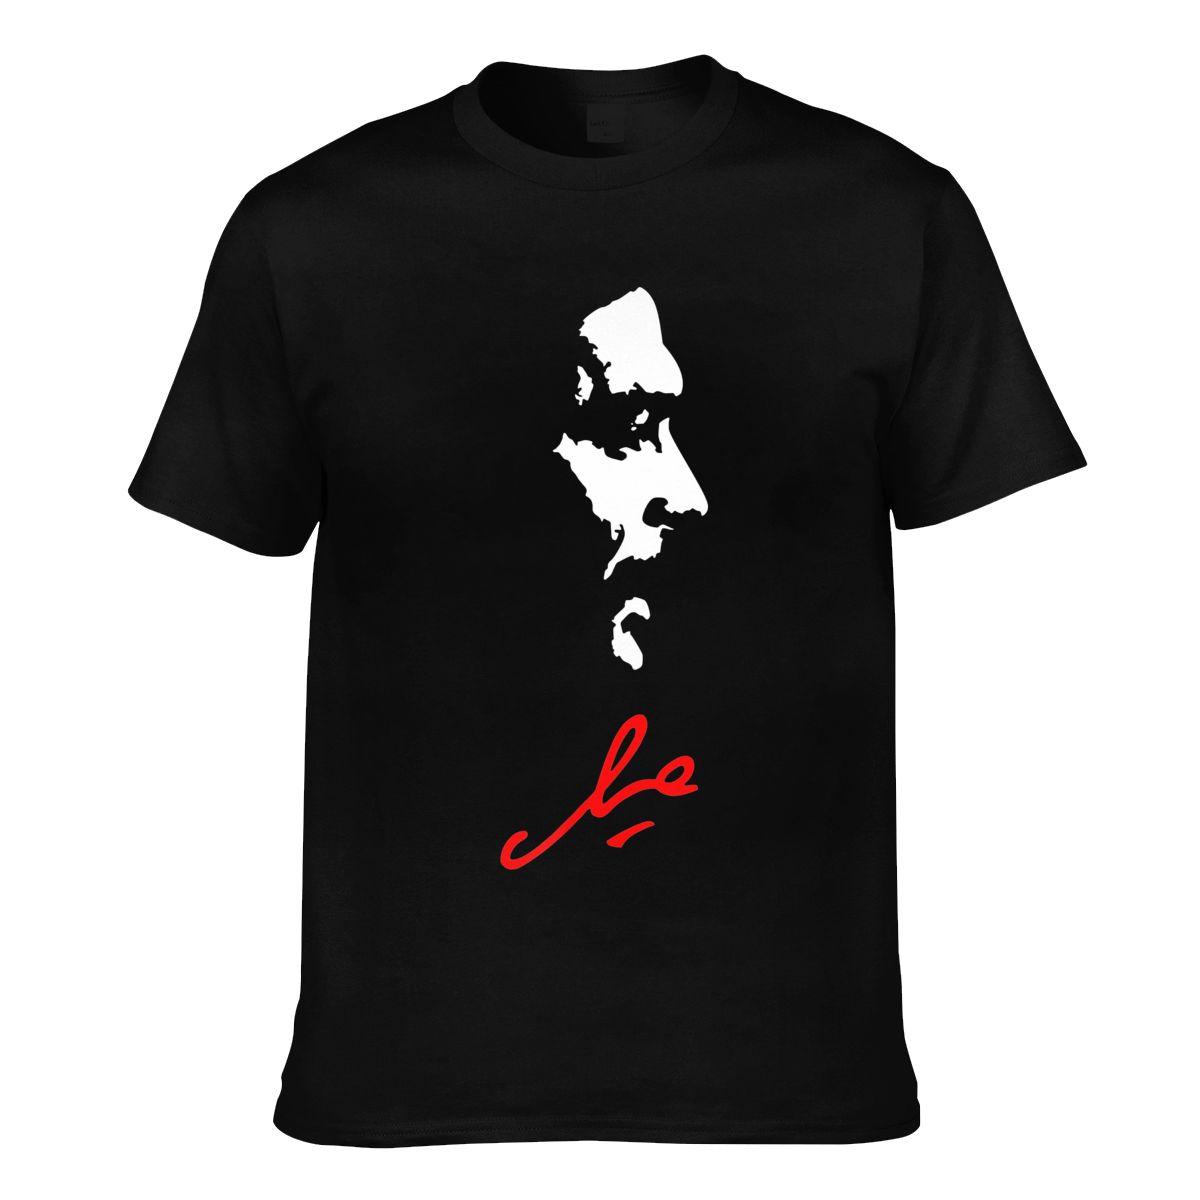 Che-Guevara-T-Shirt-Celebrity-Male-Classic-T-Shirt-Oversize-Printed-Cotton-Tee-Shirt-1.jpg